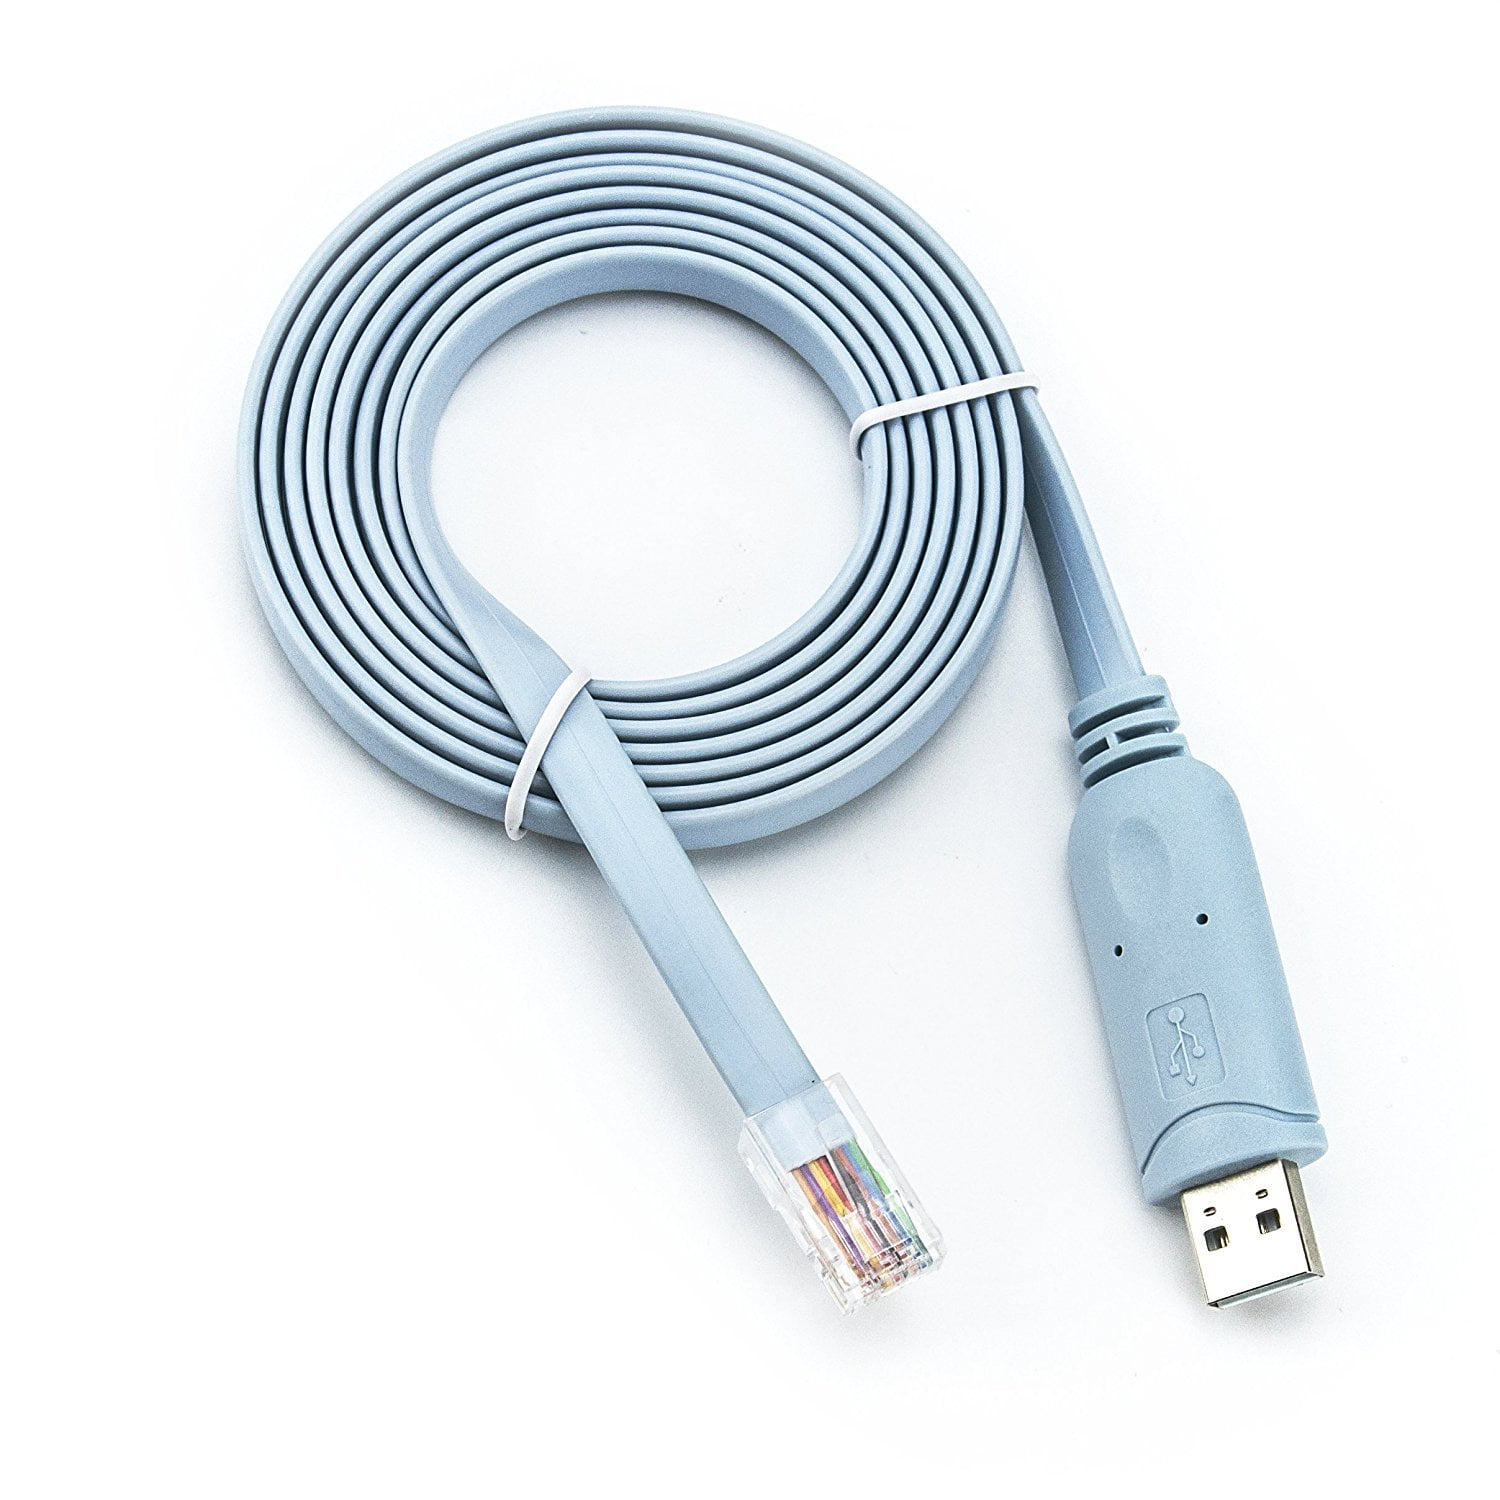 Cisco Compatible Db9 to Rj45 Console Cable 6ft Lifetime for sale online 